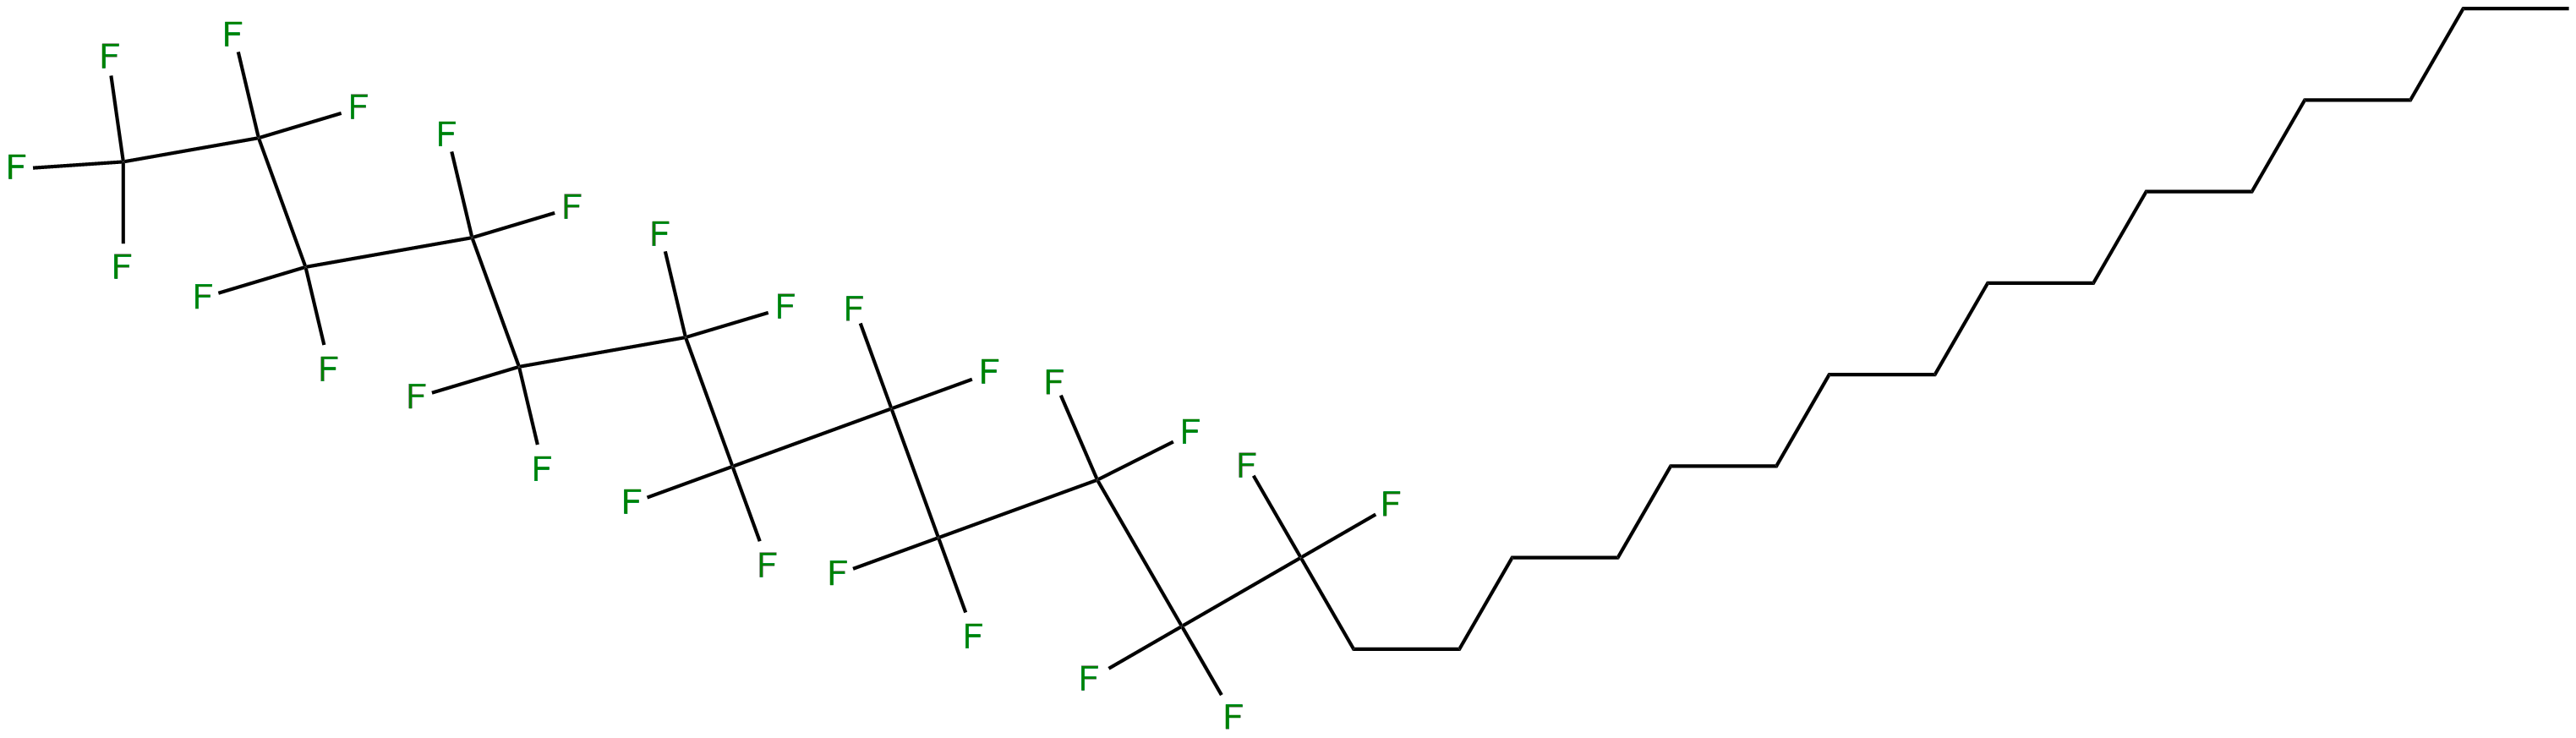 Image of 1,1,1,2,2,3,3,4,4,5,5,6,6,7,7,8,8,9,9,10,10,11,11,12,12-pentacosafluorooctacosane